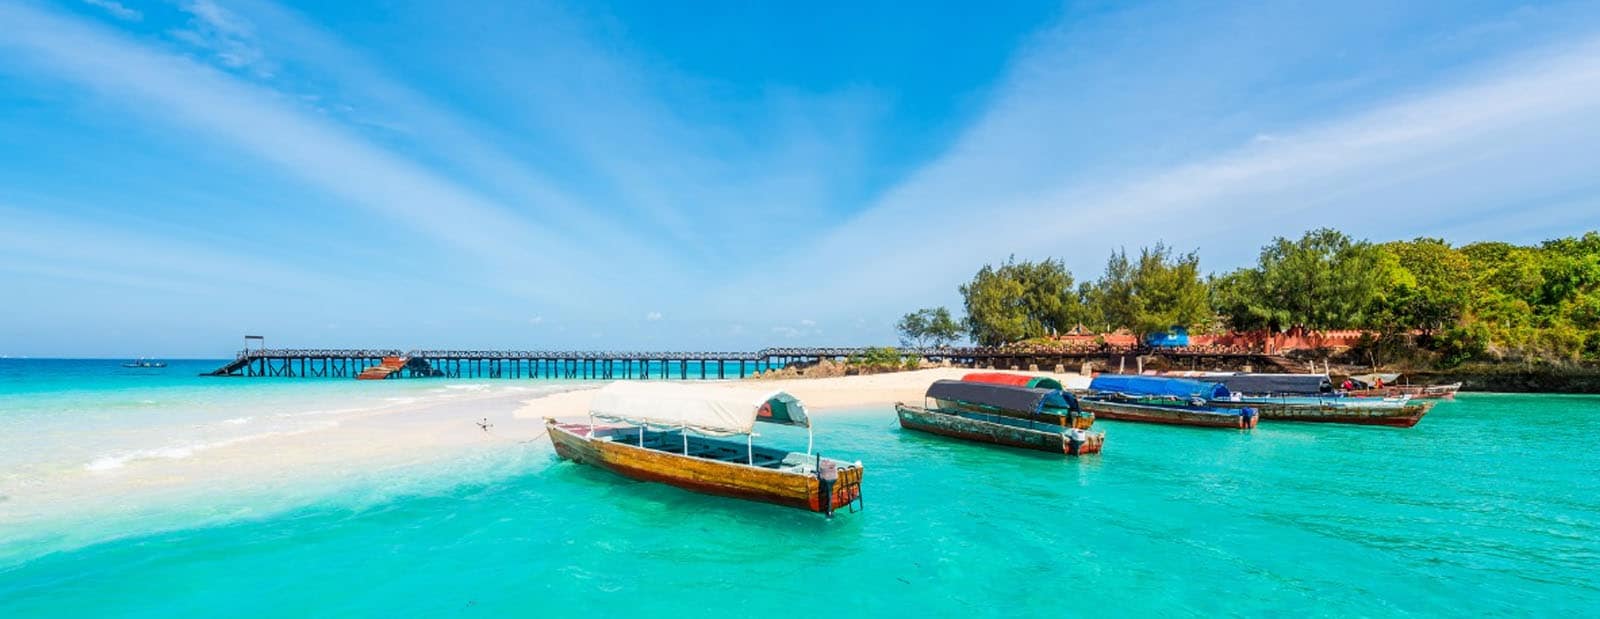 12Days Tanzania Luxury  Safari and Zanzibar Beach  Close from US$5900 p/person